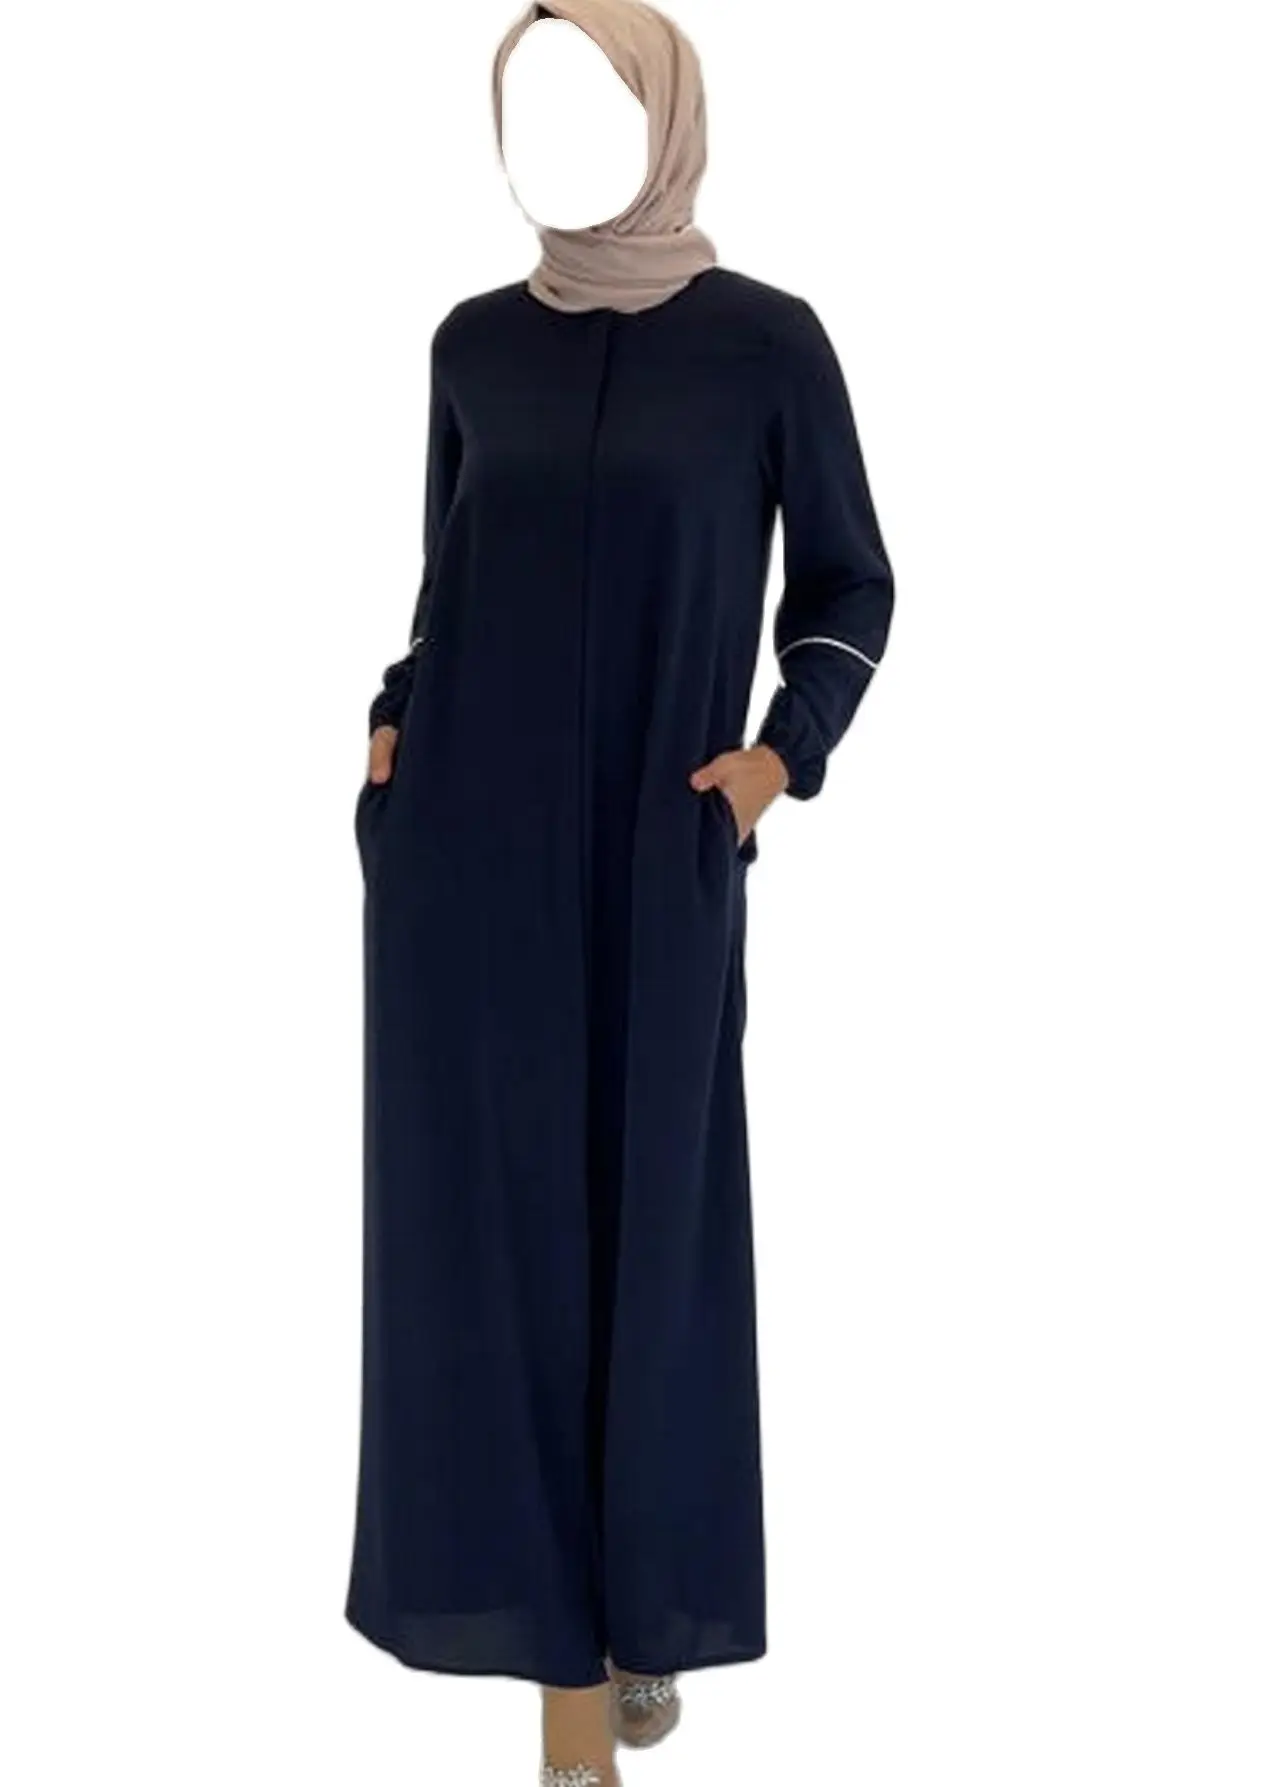 Турецкое платье Kad?n?, Турецкая мягкая ткань, Турецкая ткань, terletmez ручки, полосатая новая 148 см длинная мусульманская женская абайя